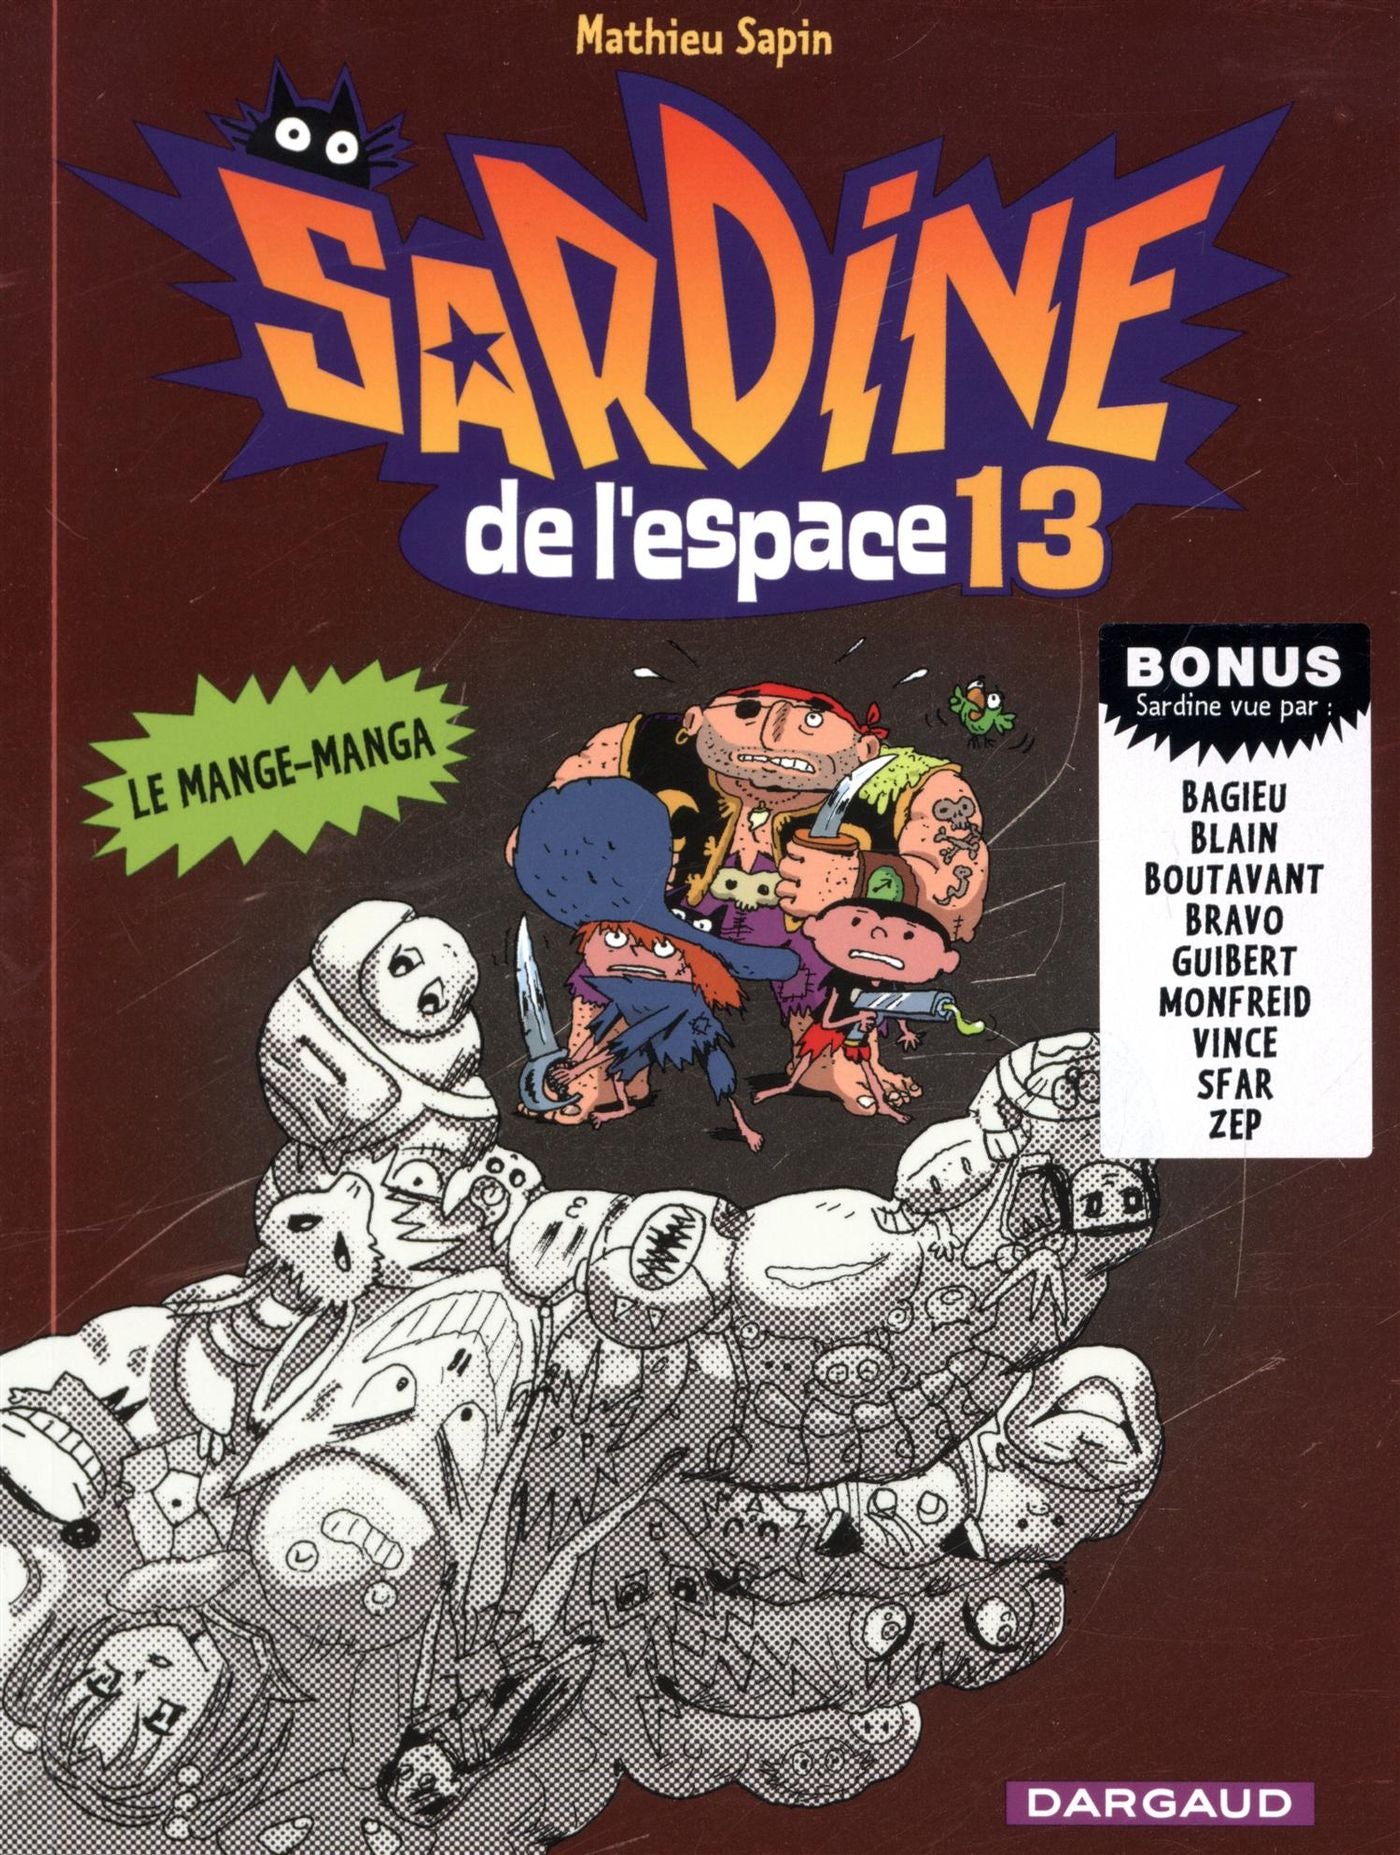 Sardine de l'espace # 13 : Le mange-manga - Mathieu Sapin